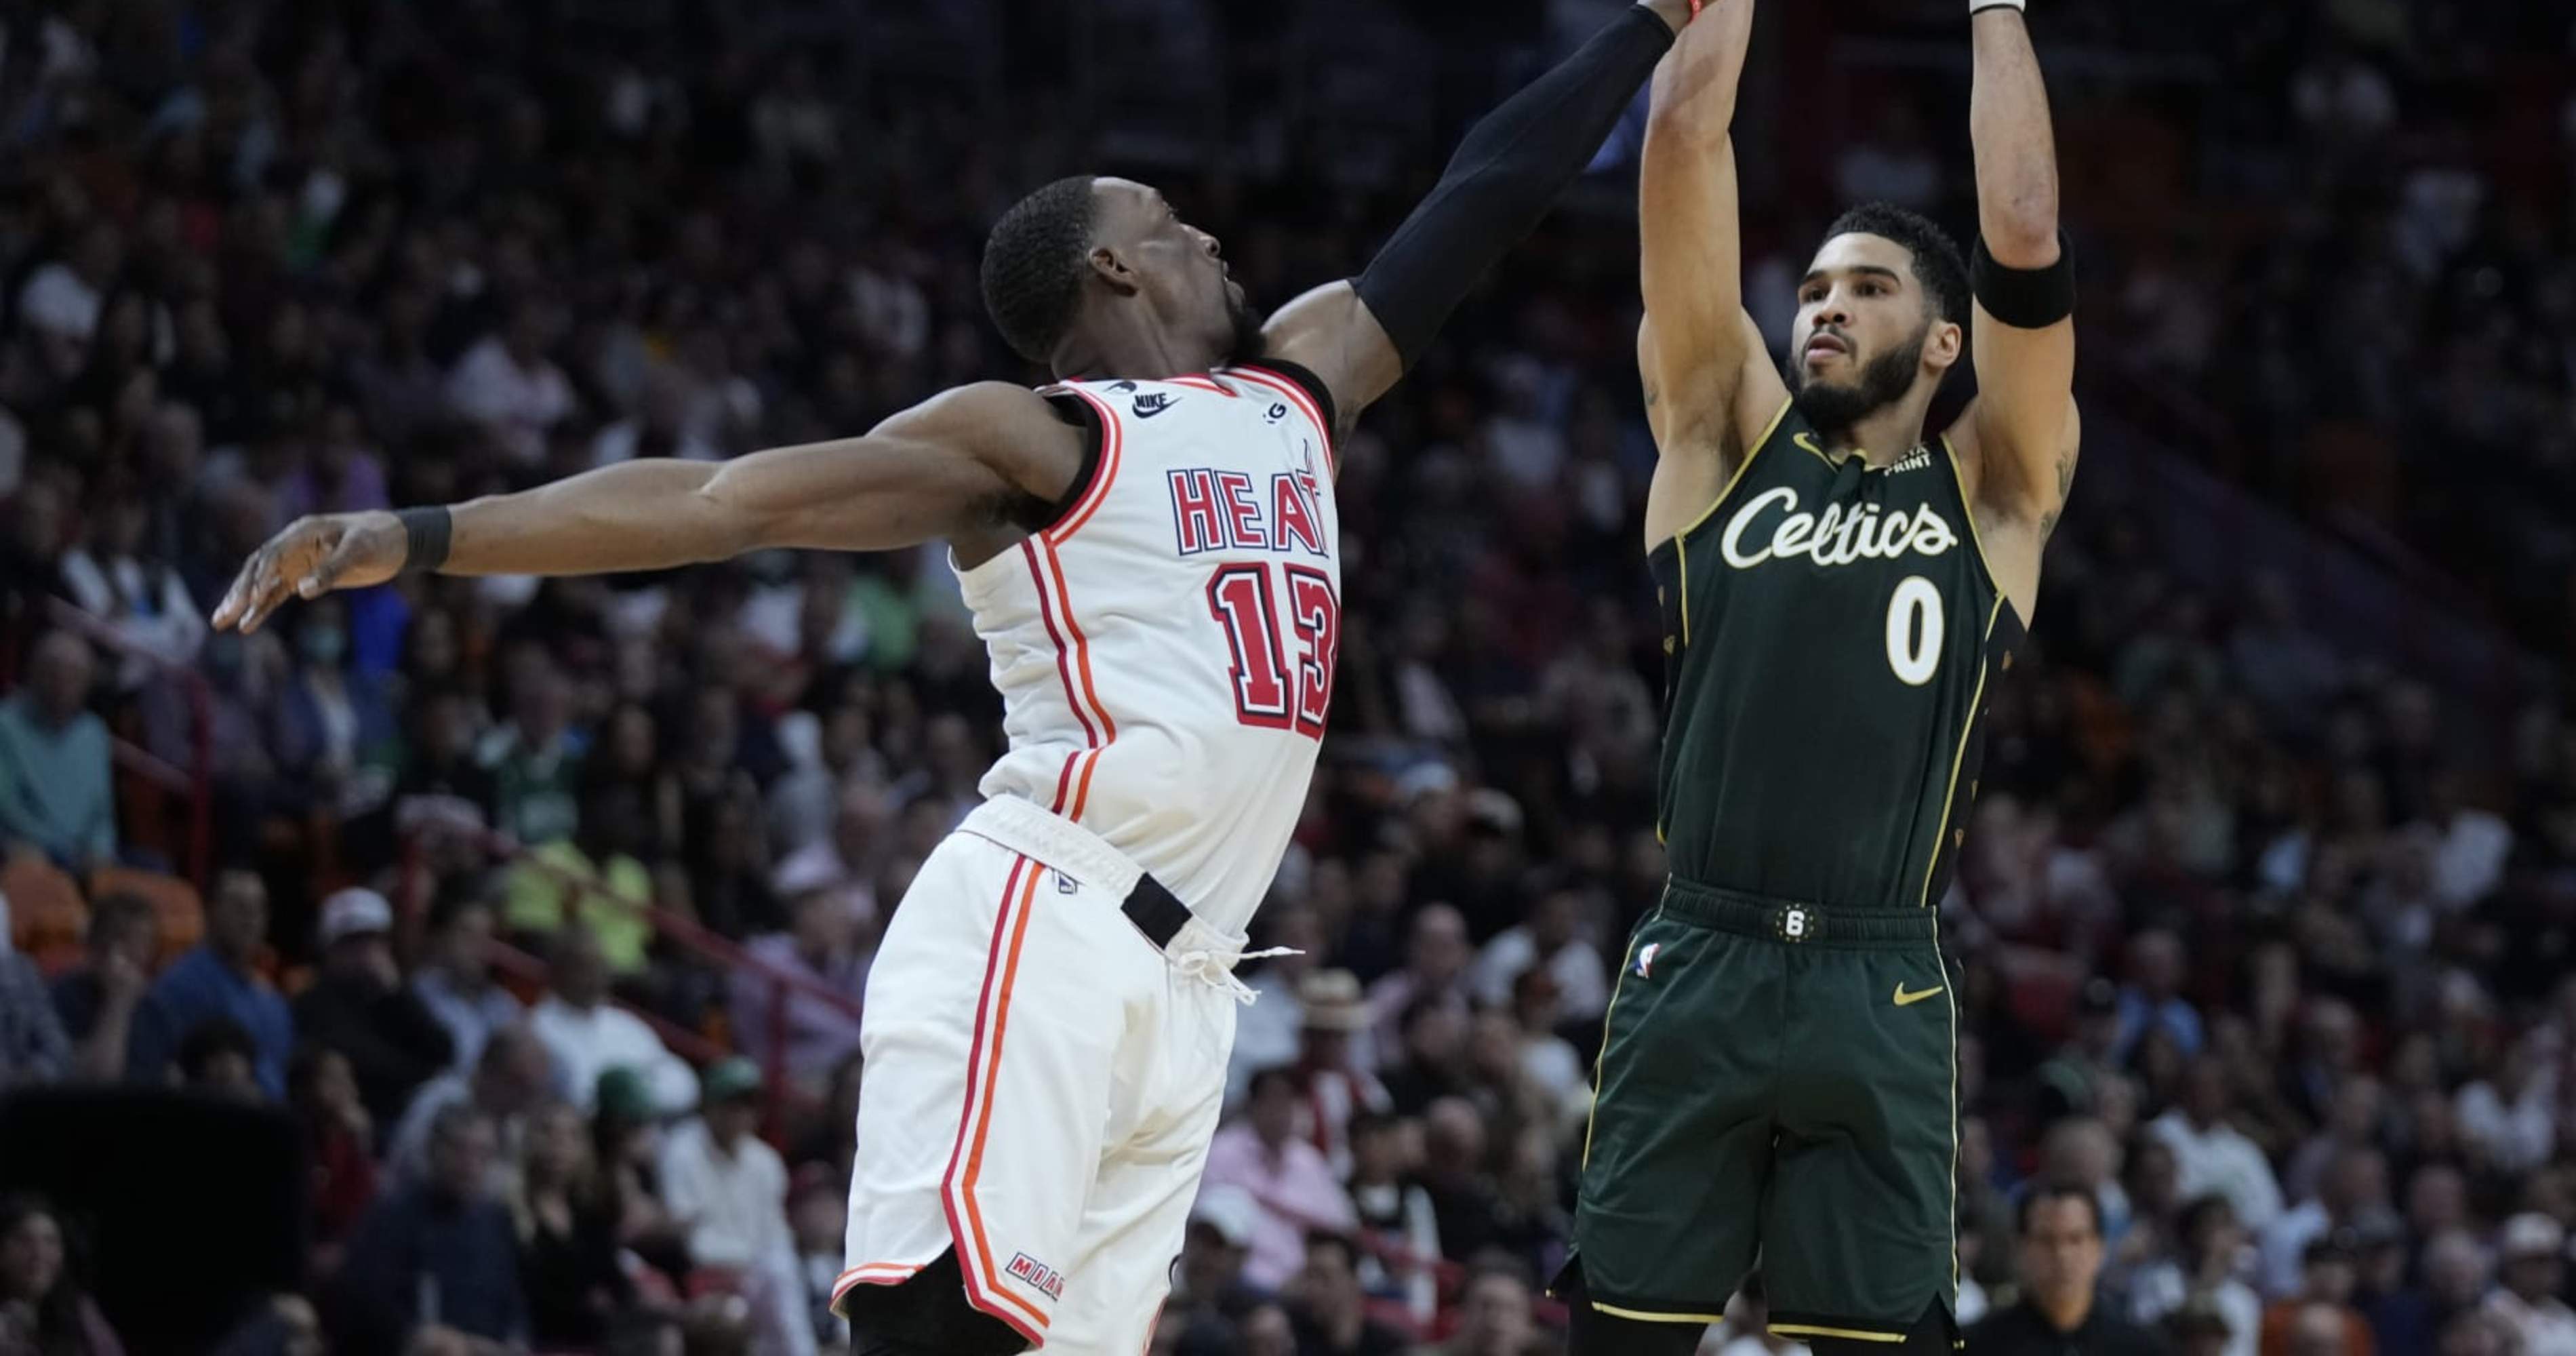 NBA fans find dramatic Heat-Celtics ending hilarious, turn Jayson